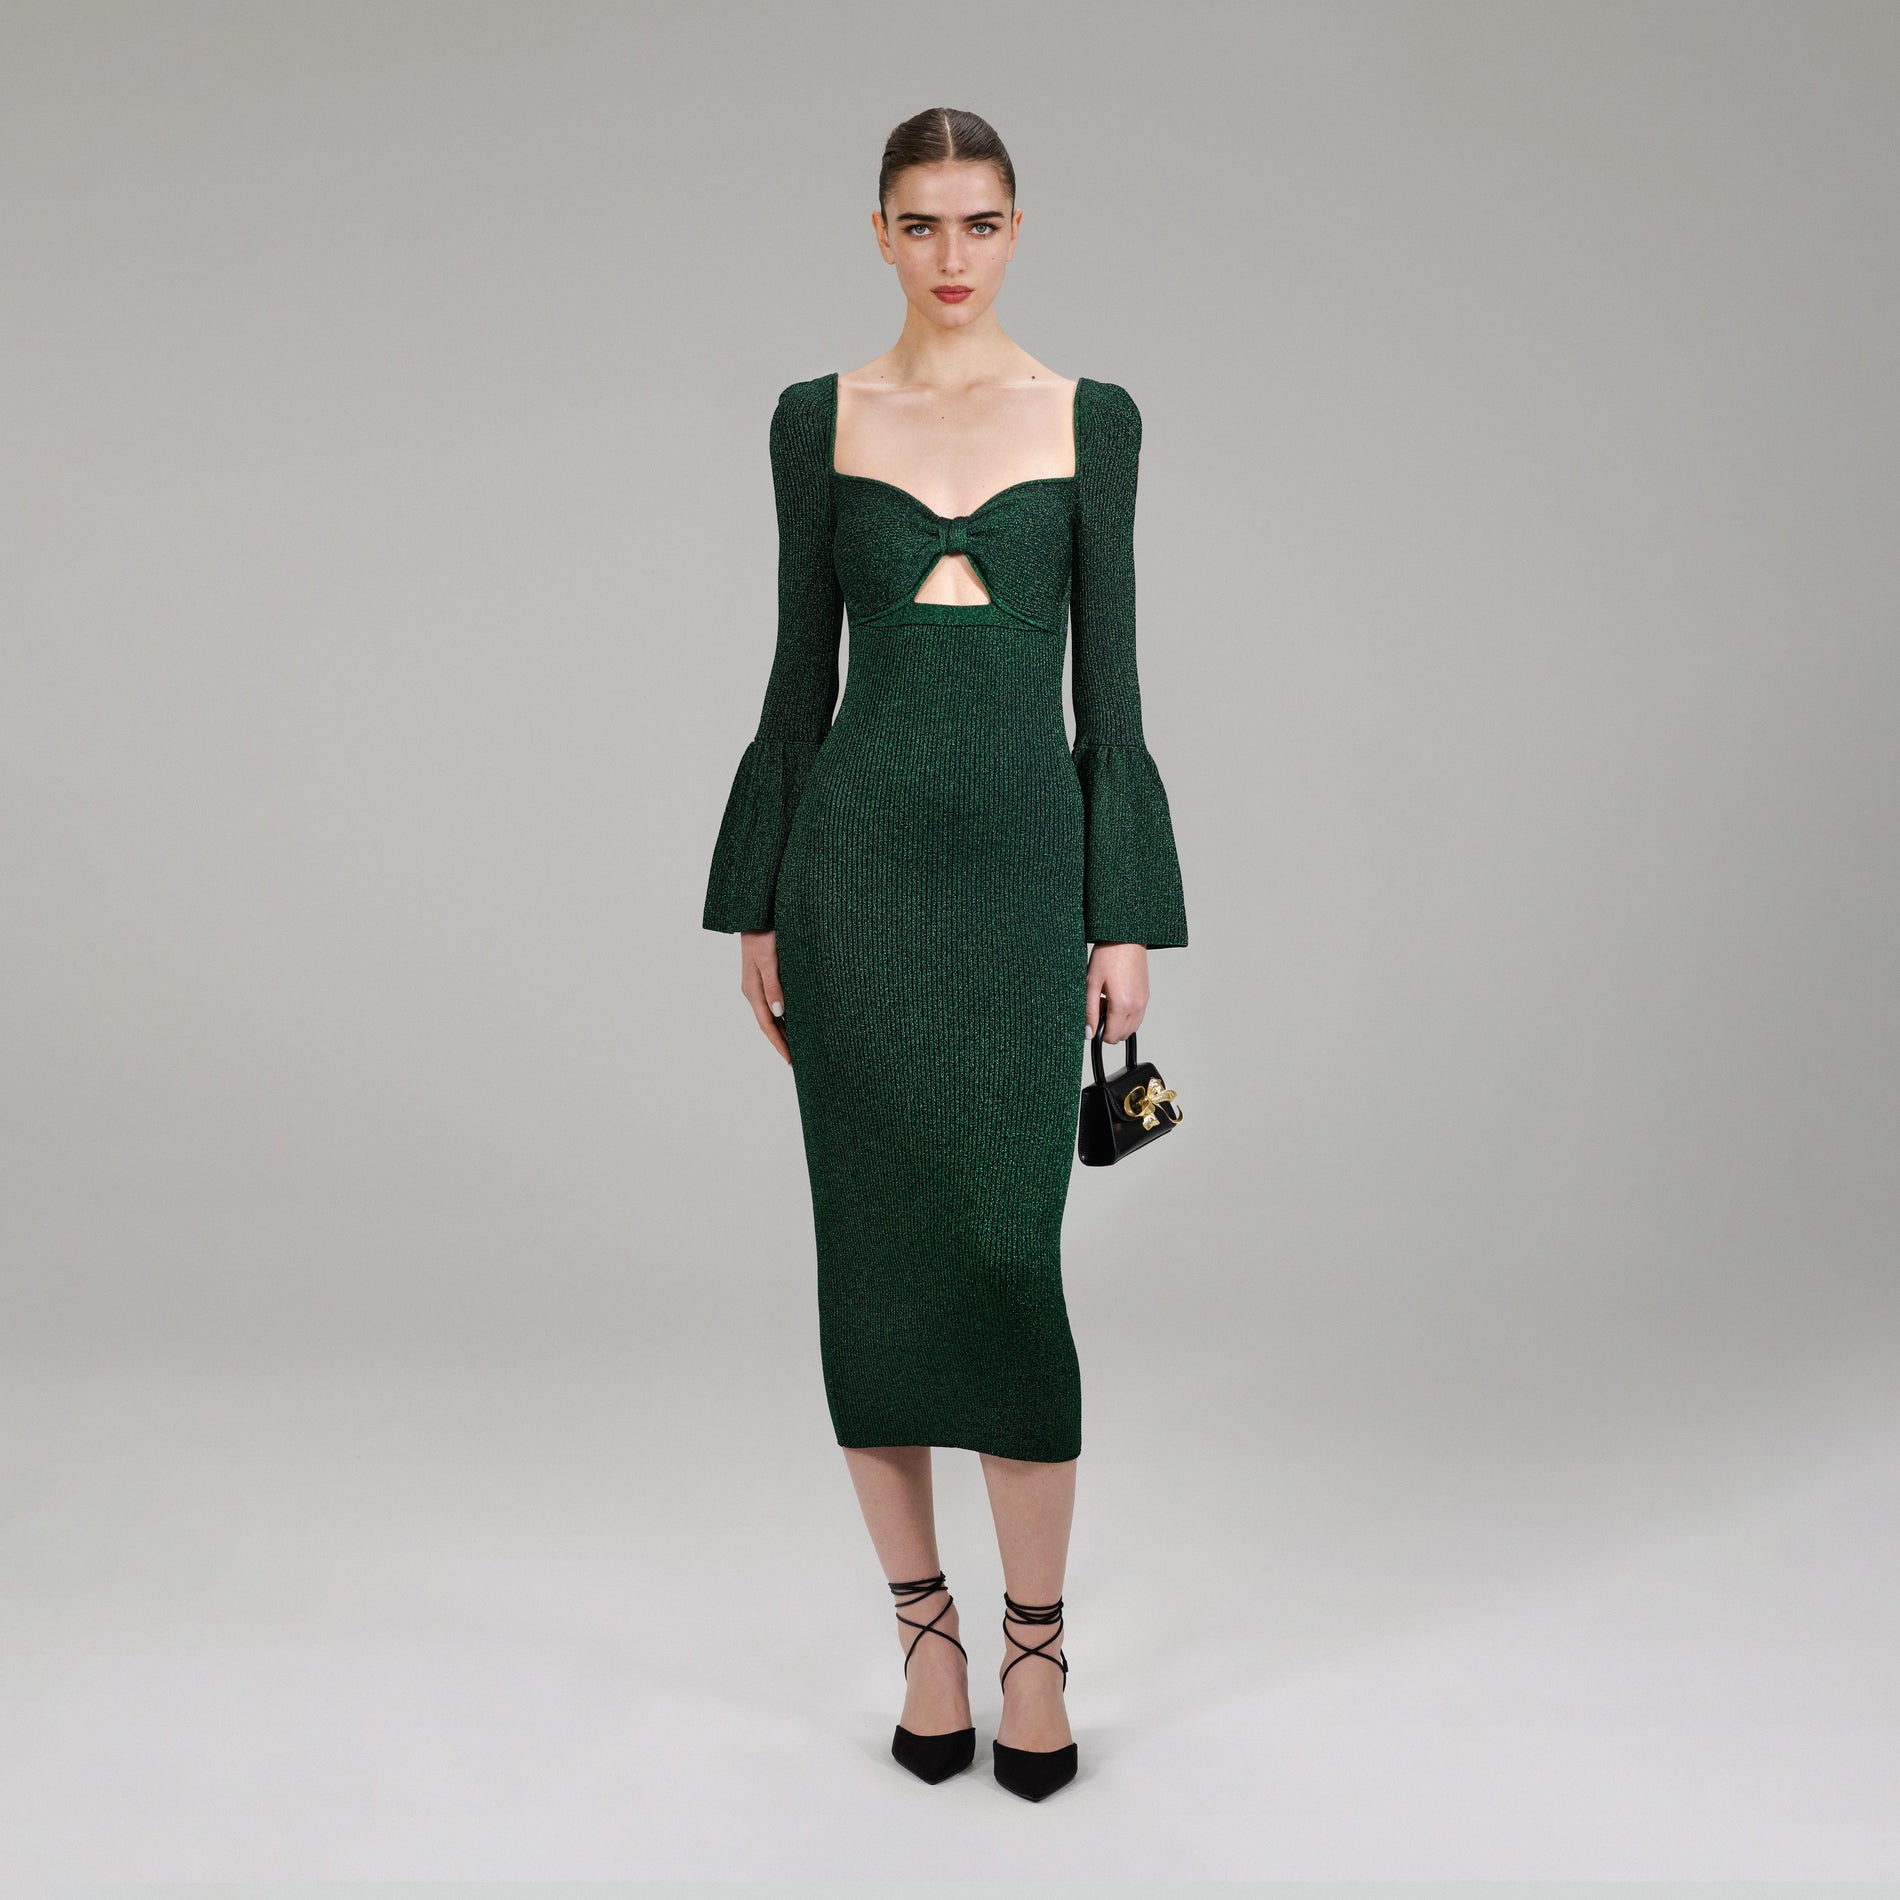 A woman wearing the Green Lurex Knit Midi Dress